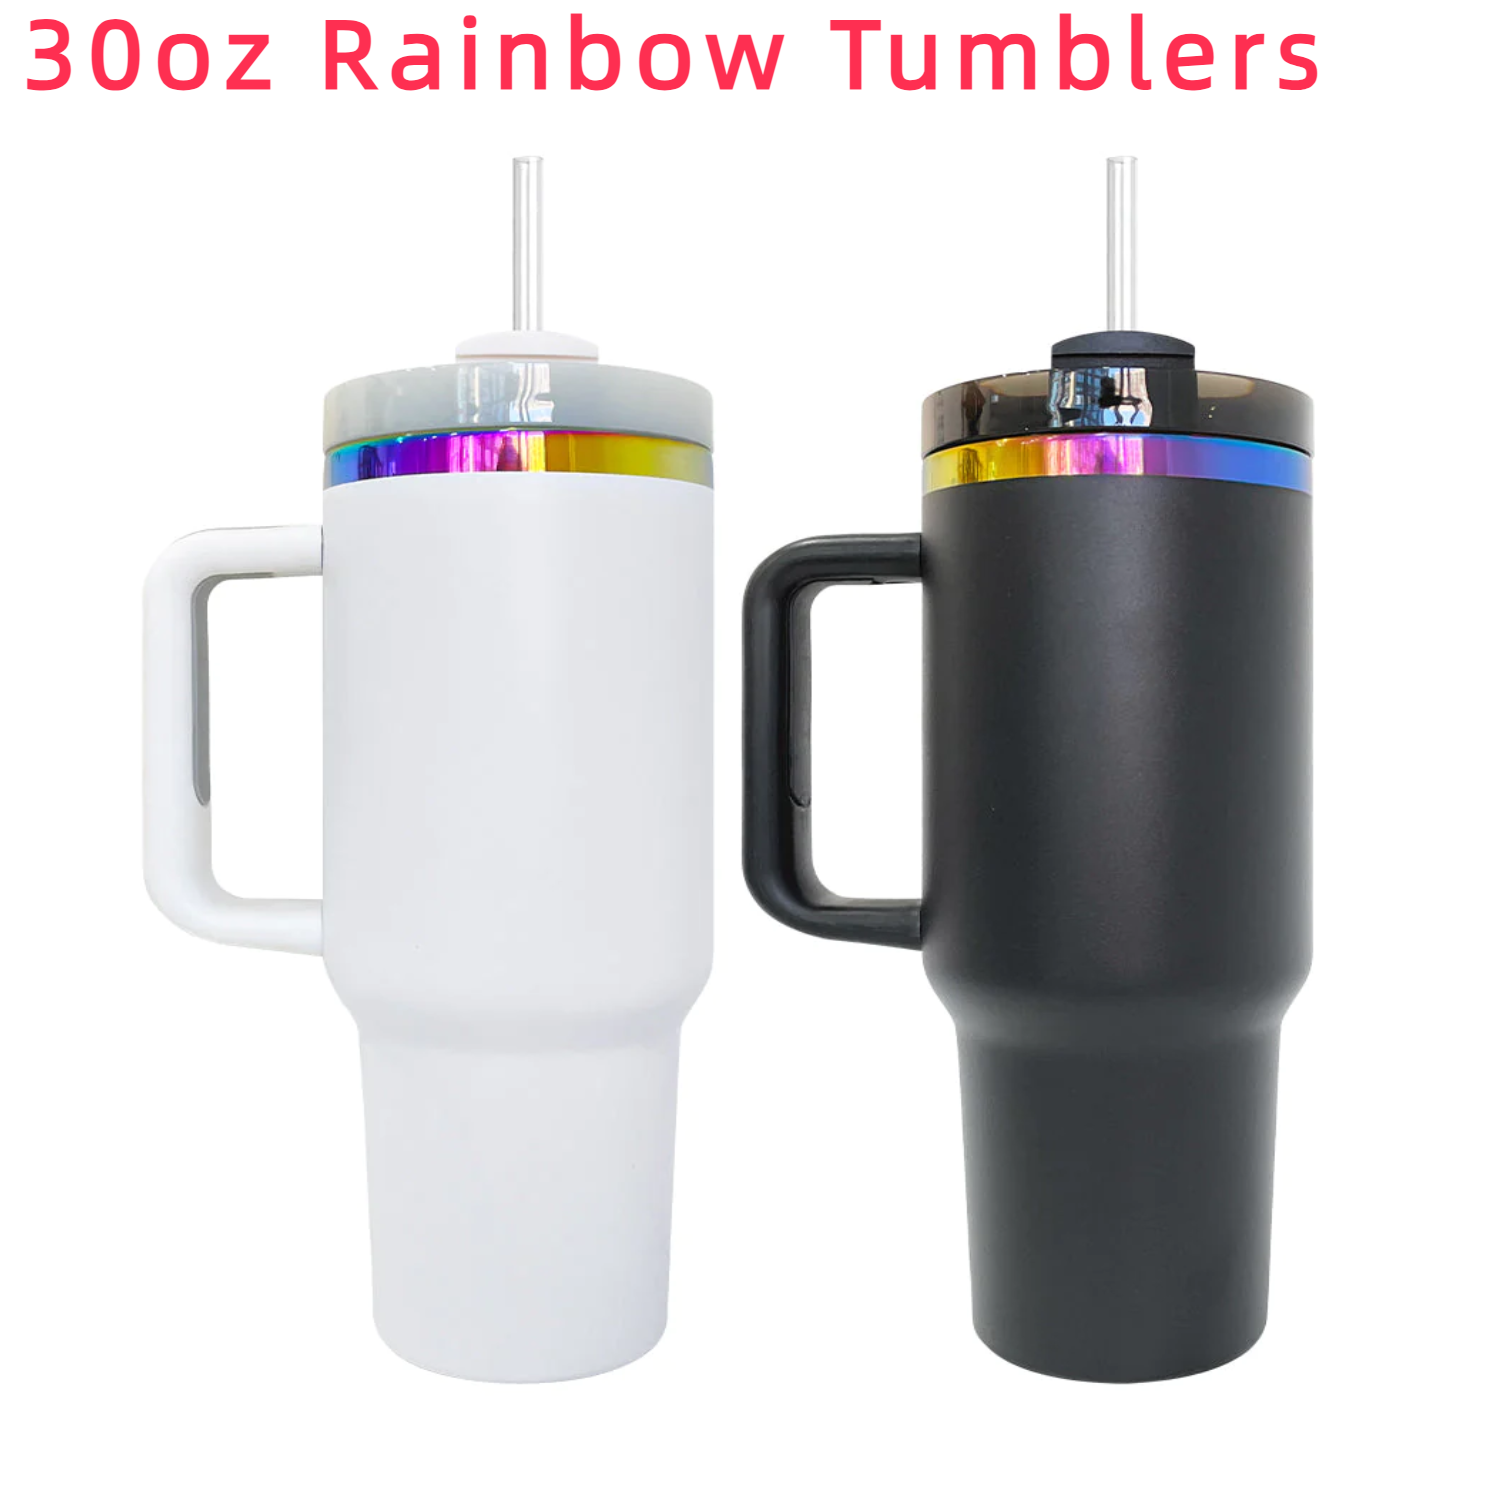 10 oz. Rainbow Tumbler